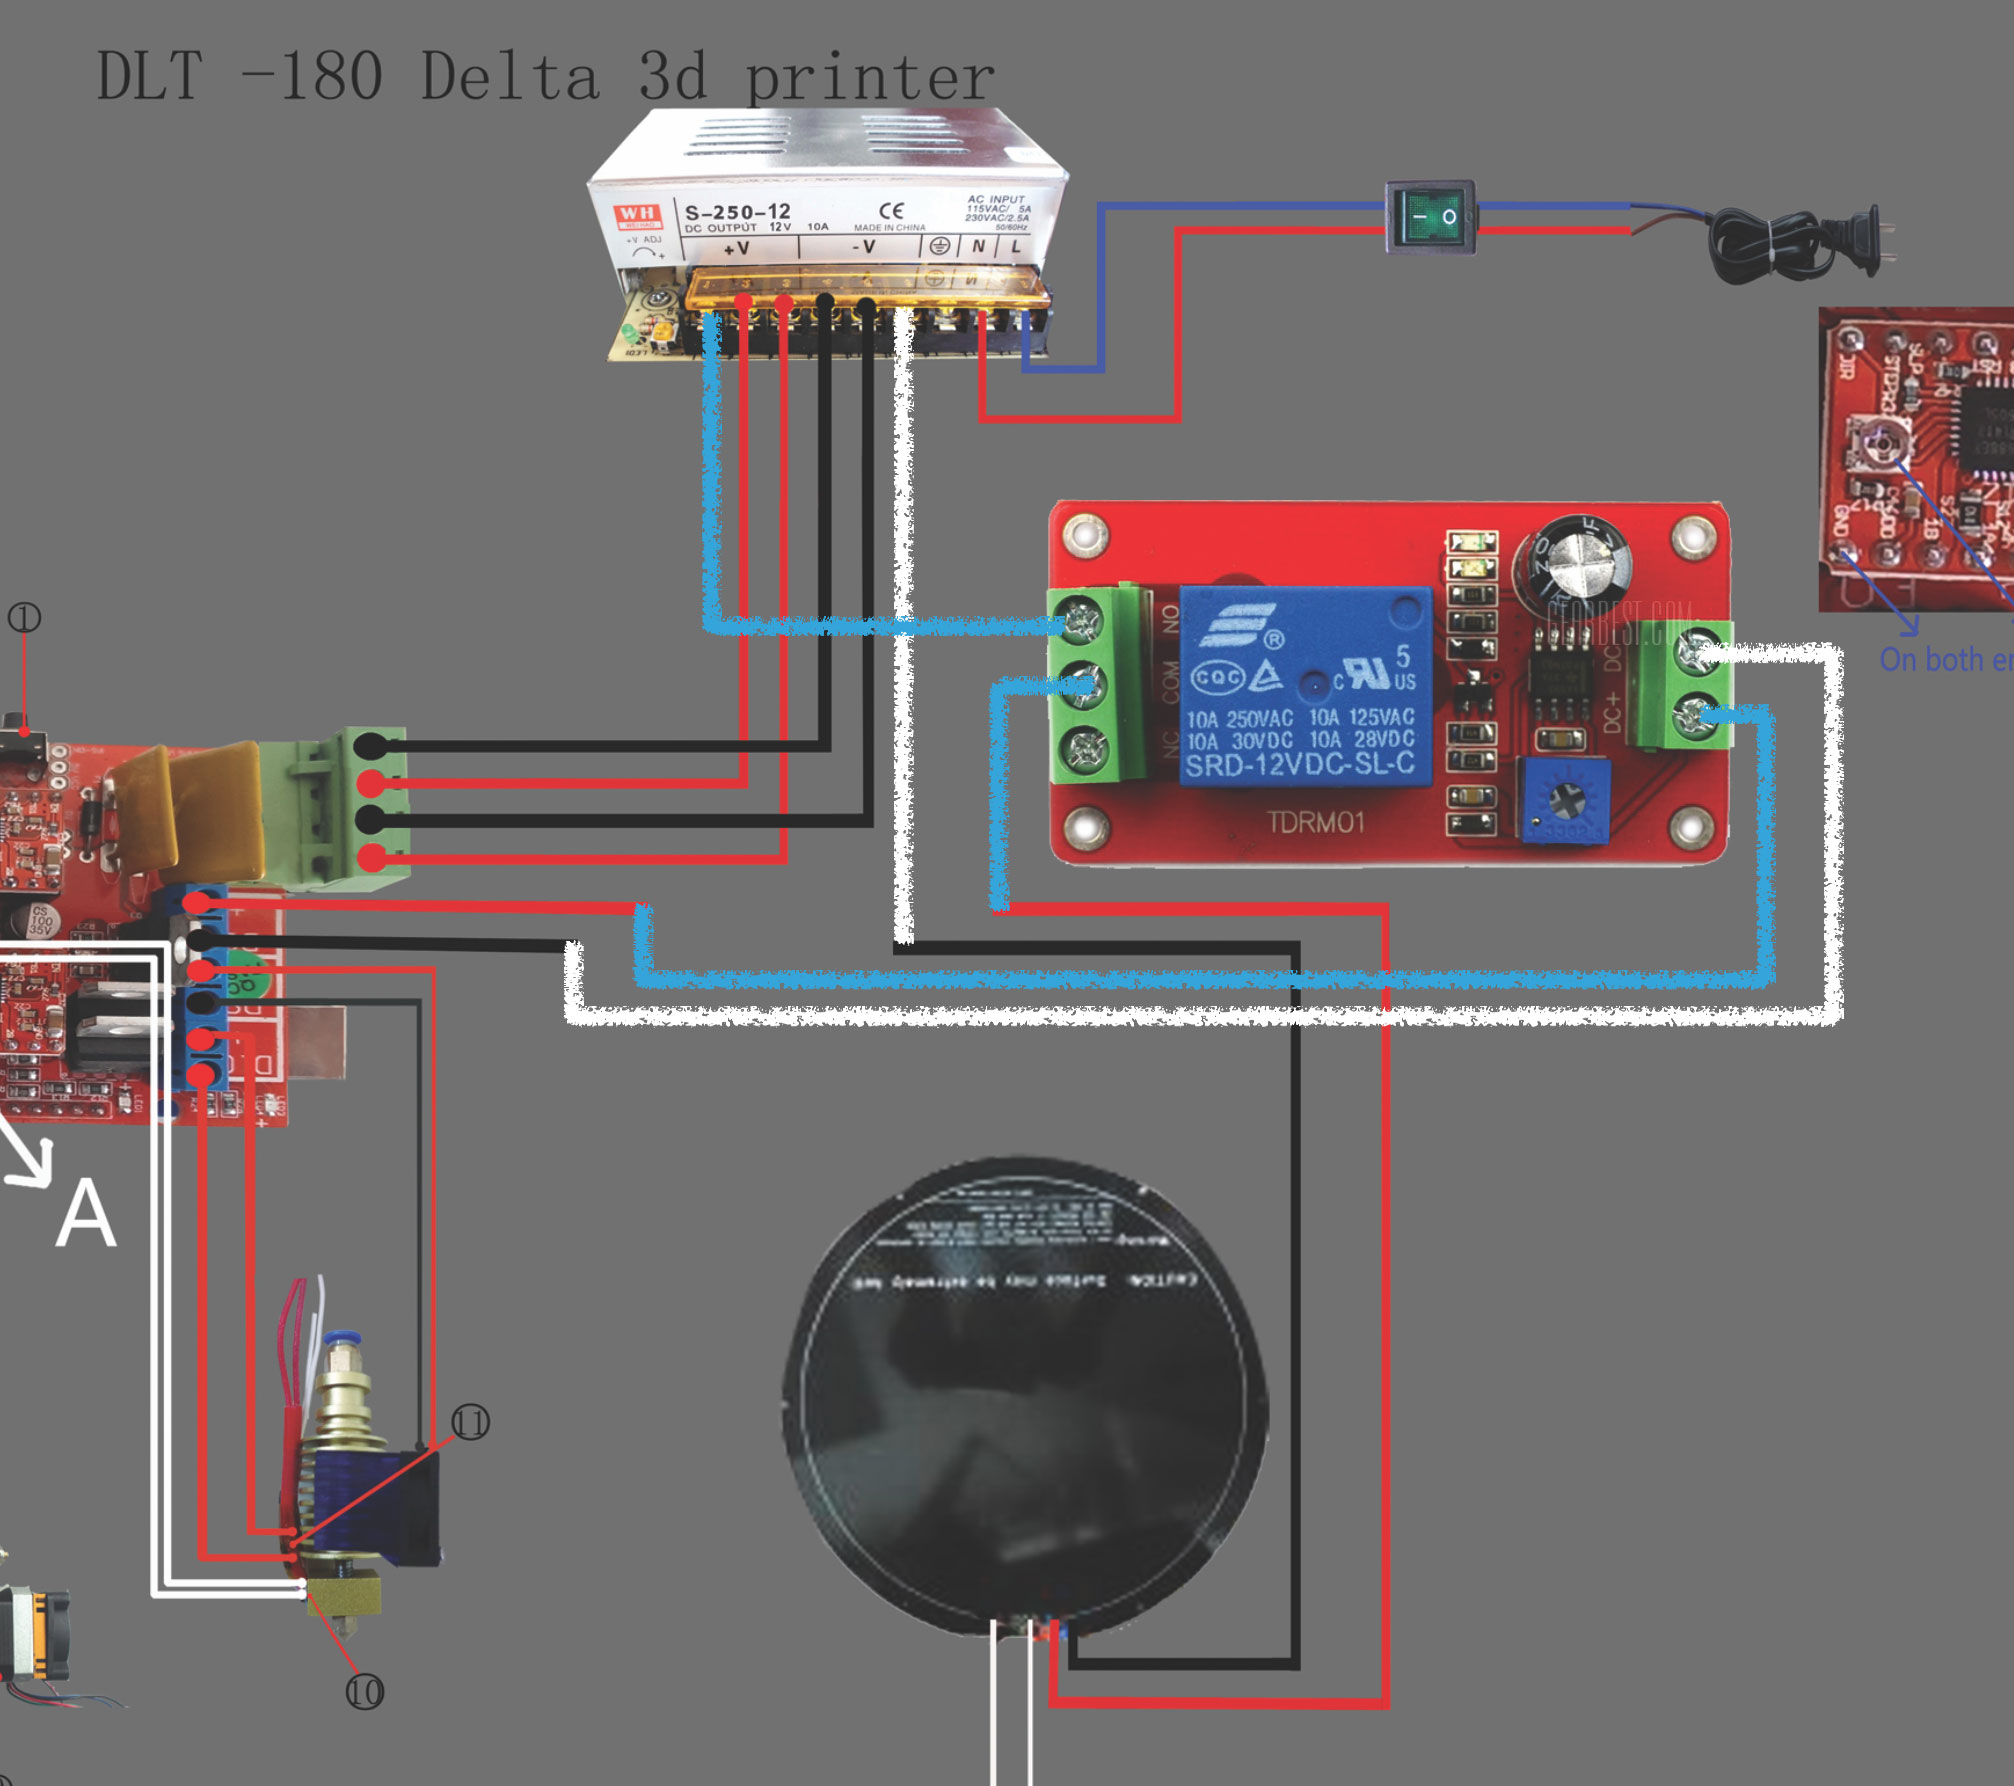 He3D Delta DLT 180: Heat Bed Relay Wiring - 3D Printers ... 8 round plug wiring diagram 